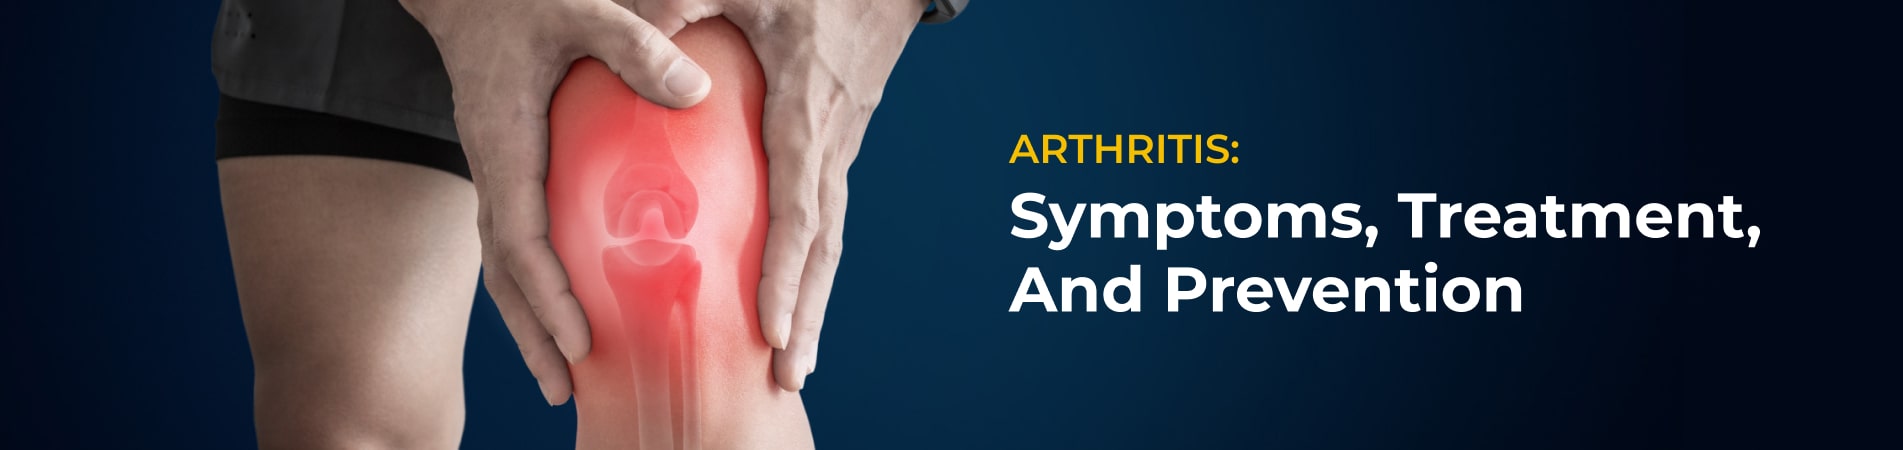 Arthritis Symptoms, Treatment, And Prevention